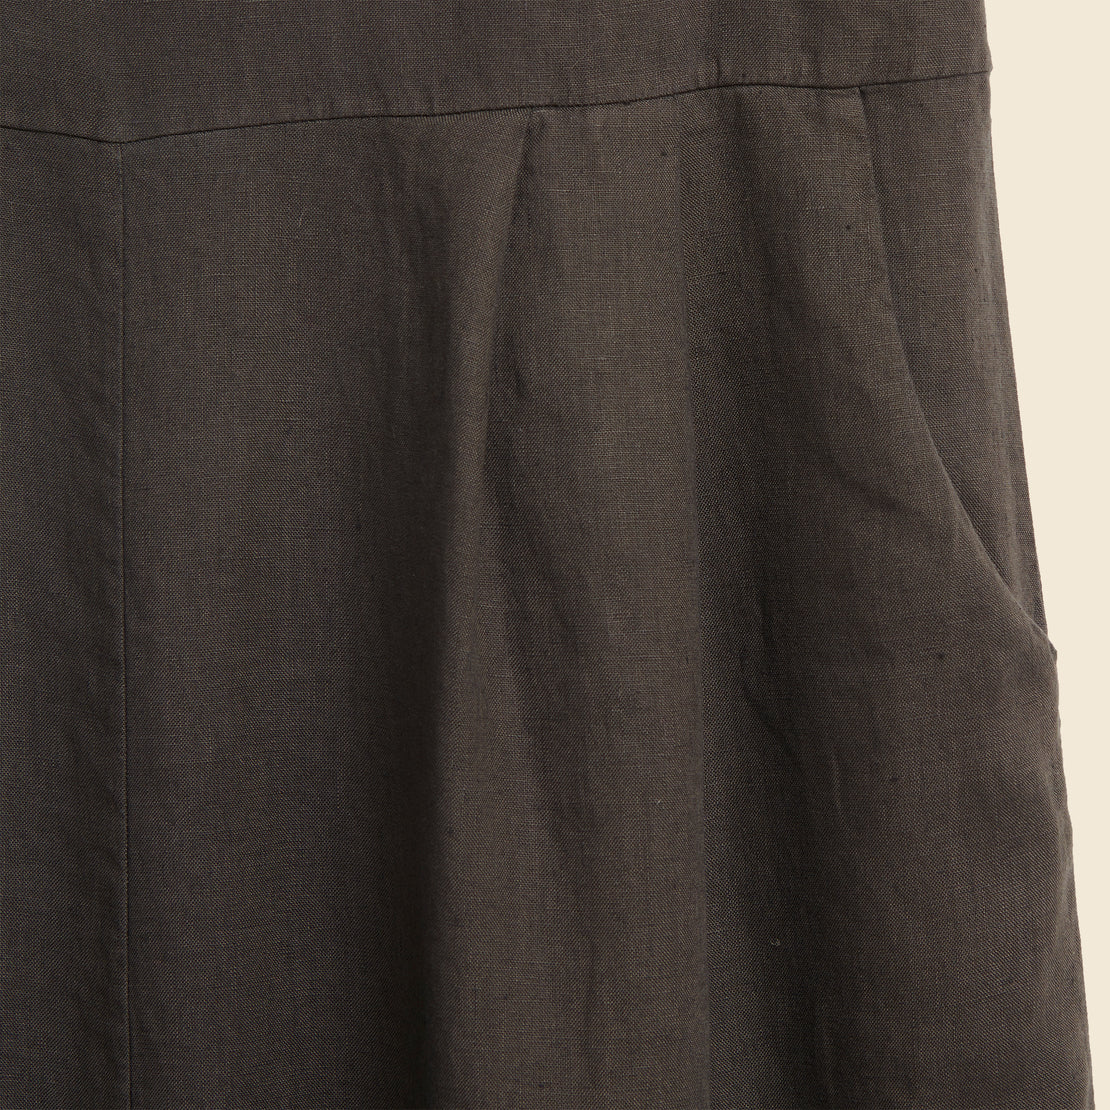 Sam Linen Jumpsuit - Ink - Filosofia - STAG Provisions - W - Onepiece - Jumpsuit